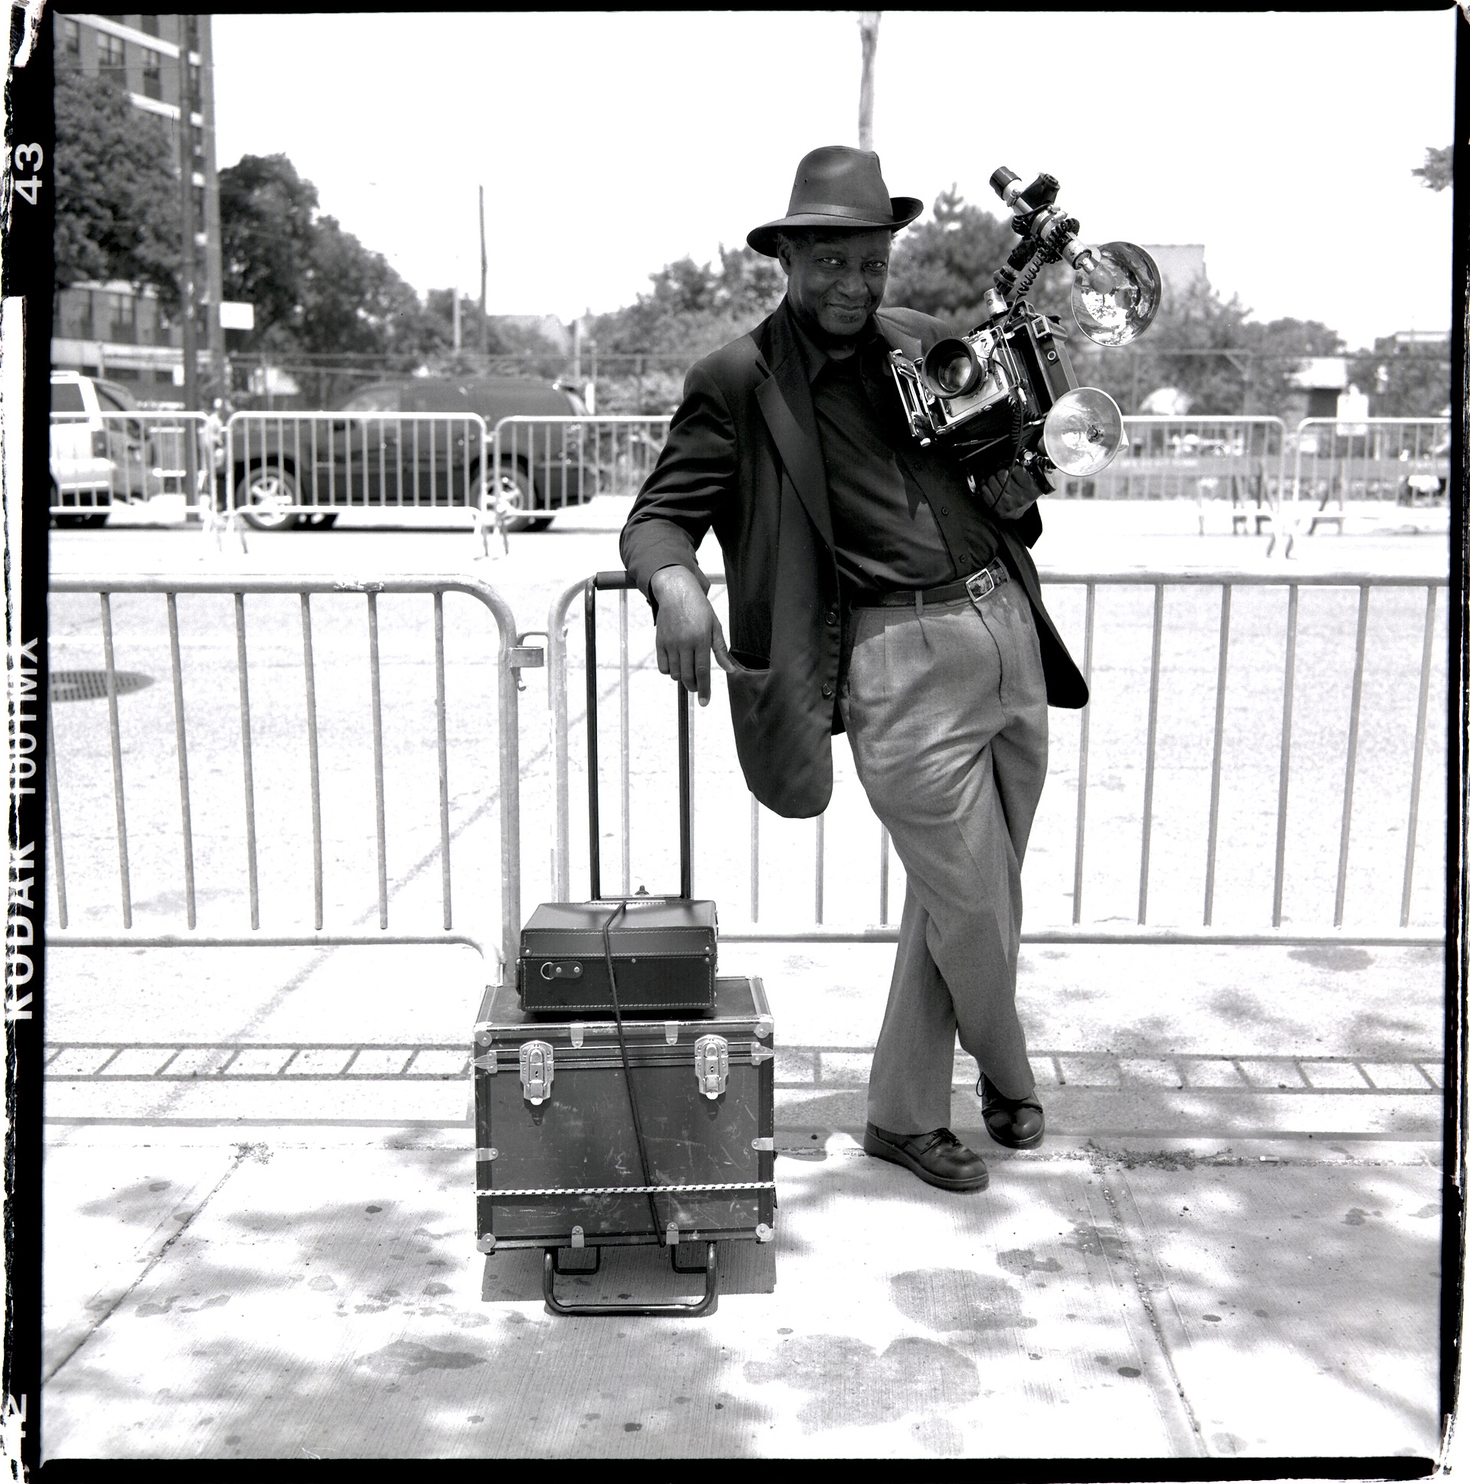   Louis Mendez - Polaroid street photographer - NY  